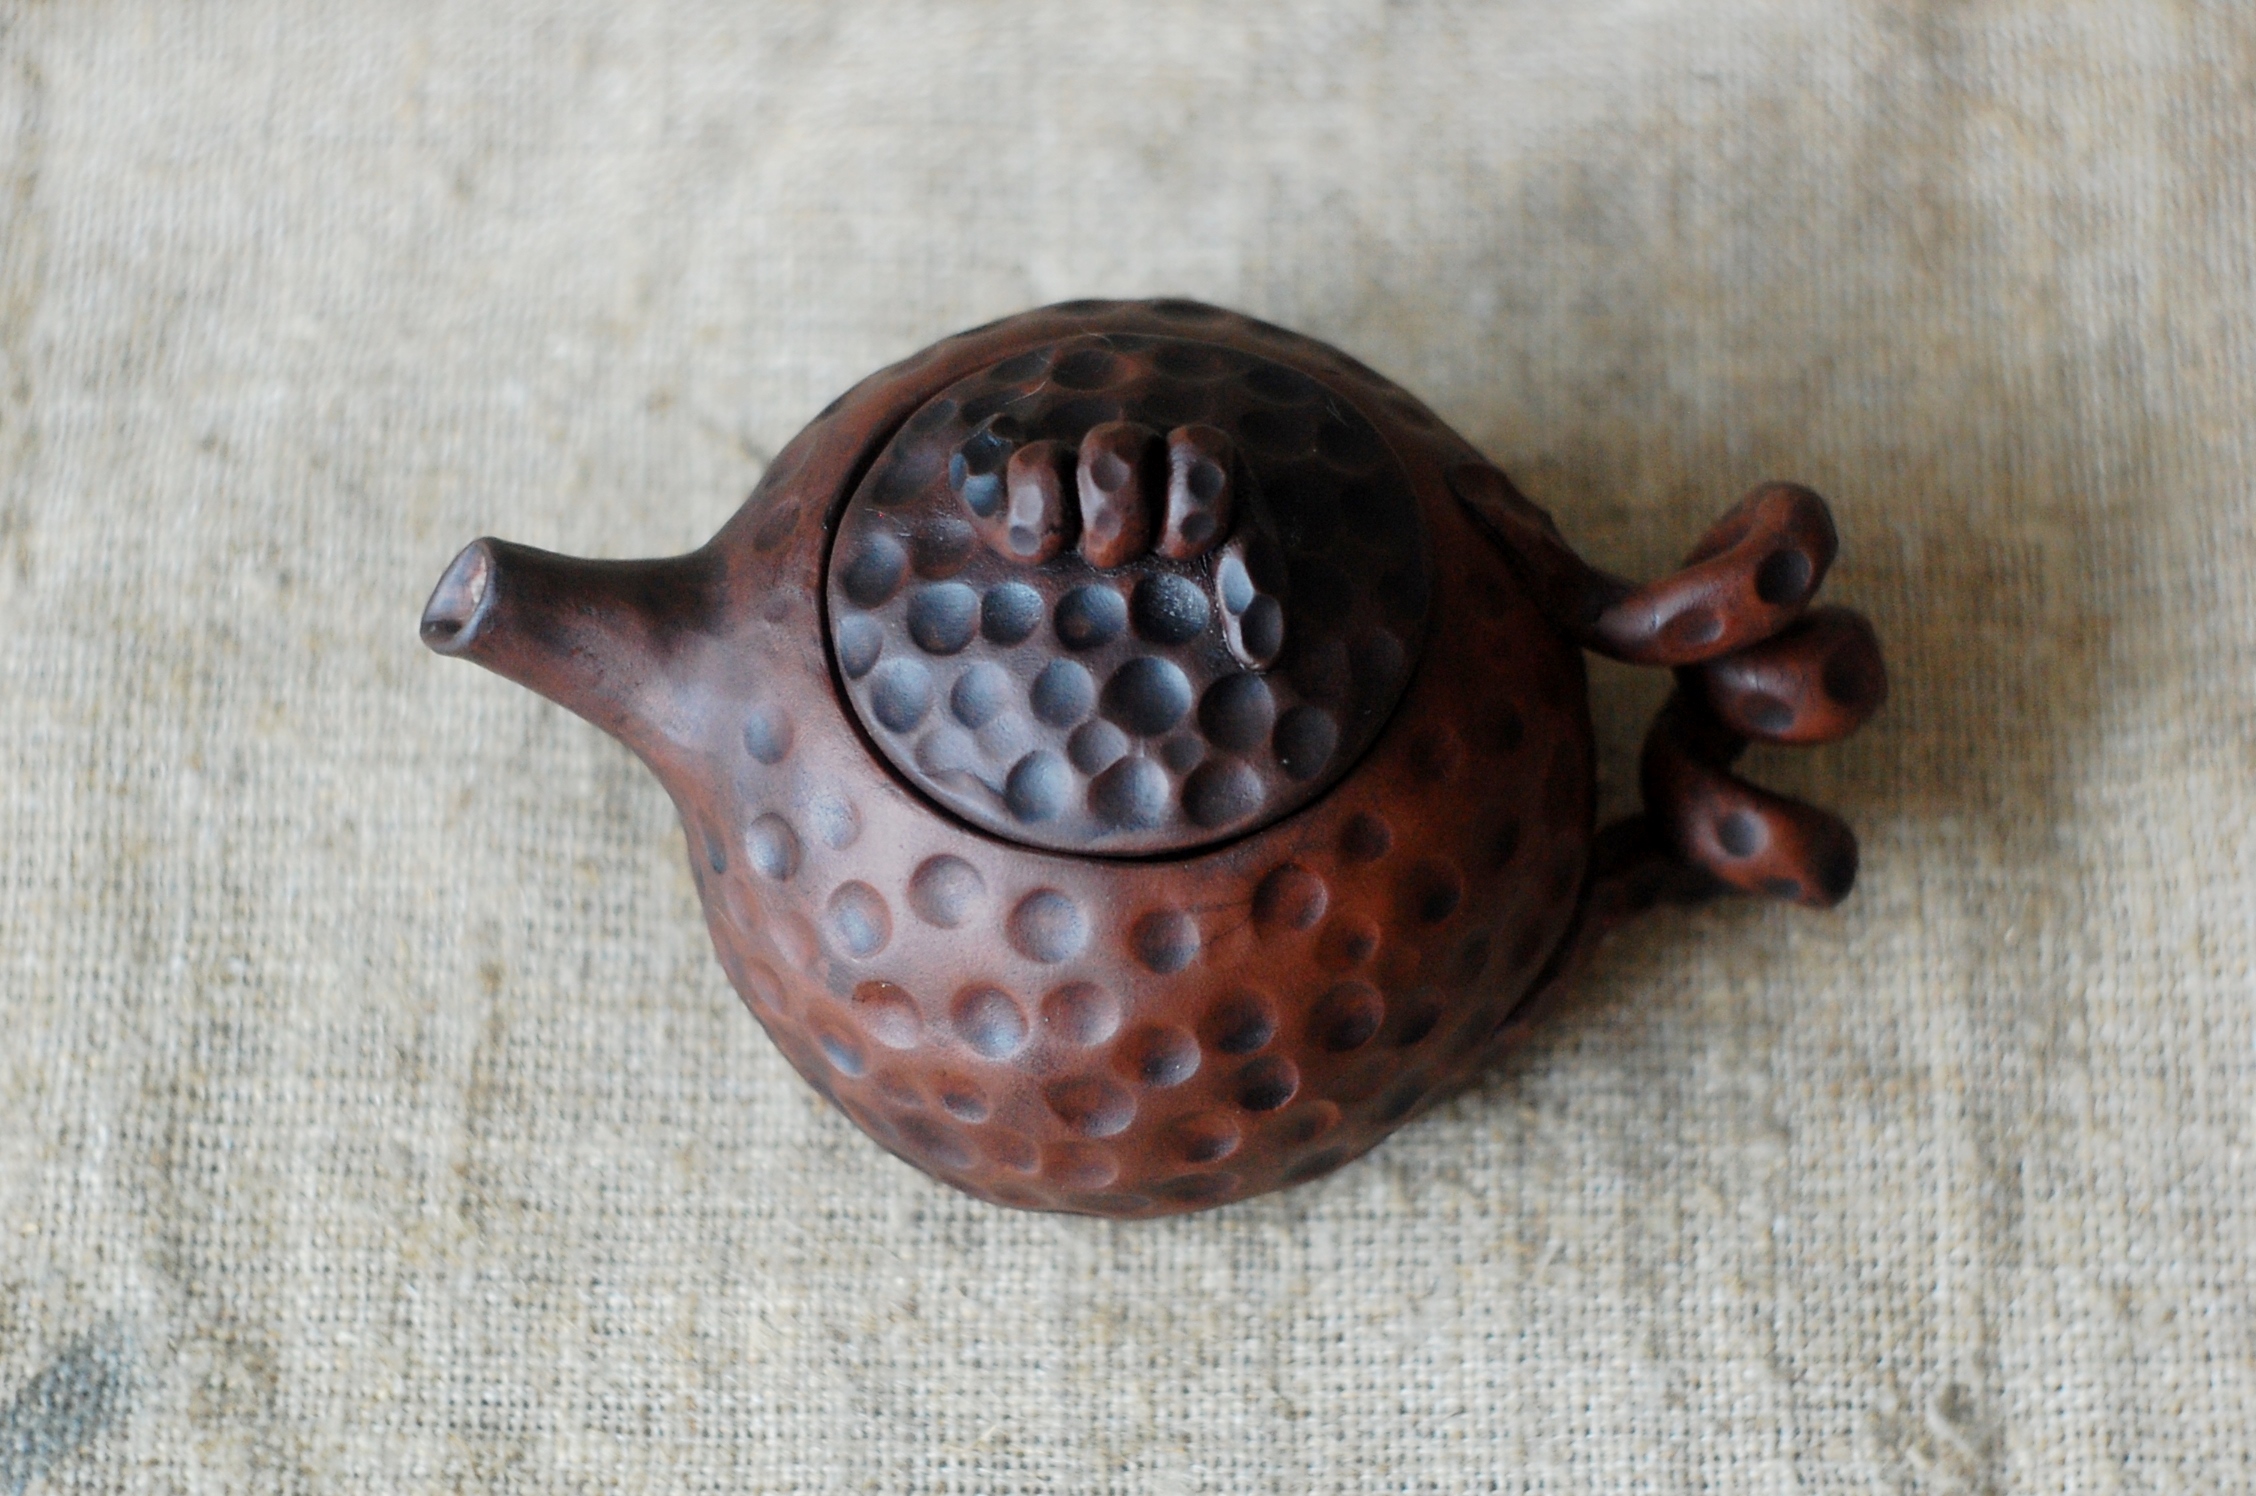 Pottery tea brewing pot or teapot for tea ceremony Bug